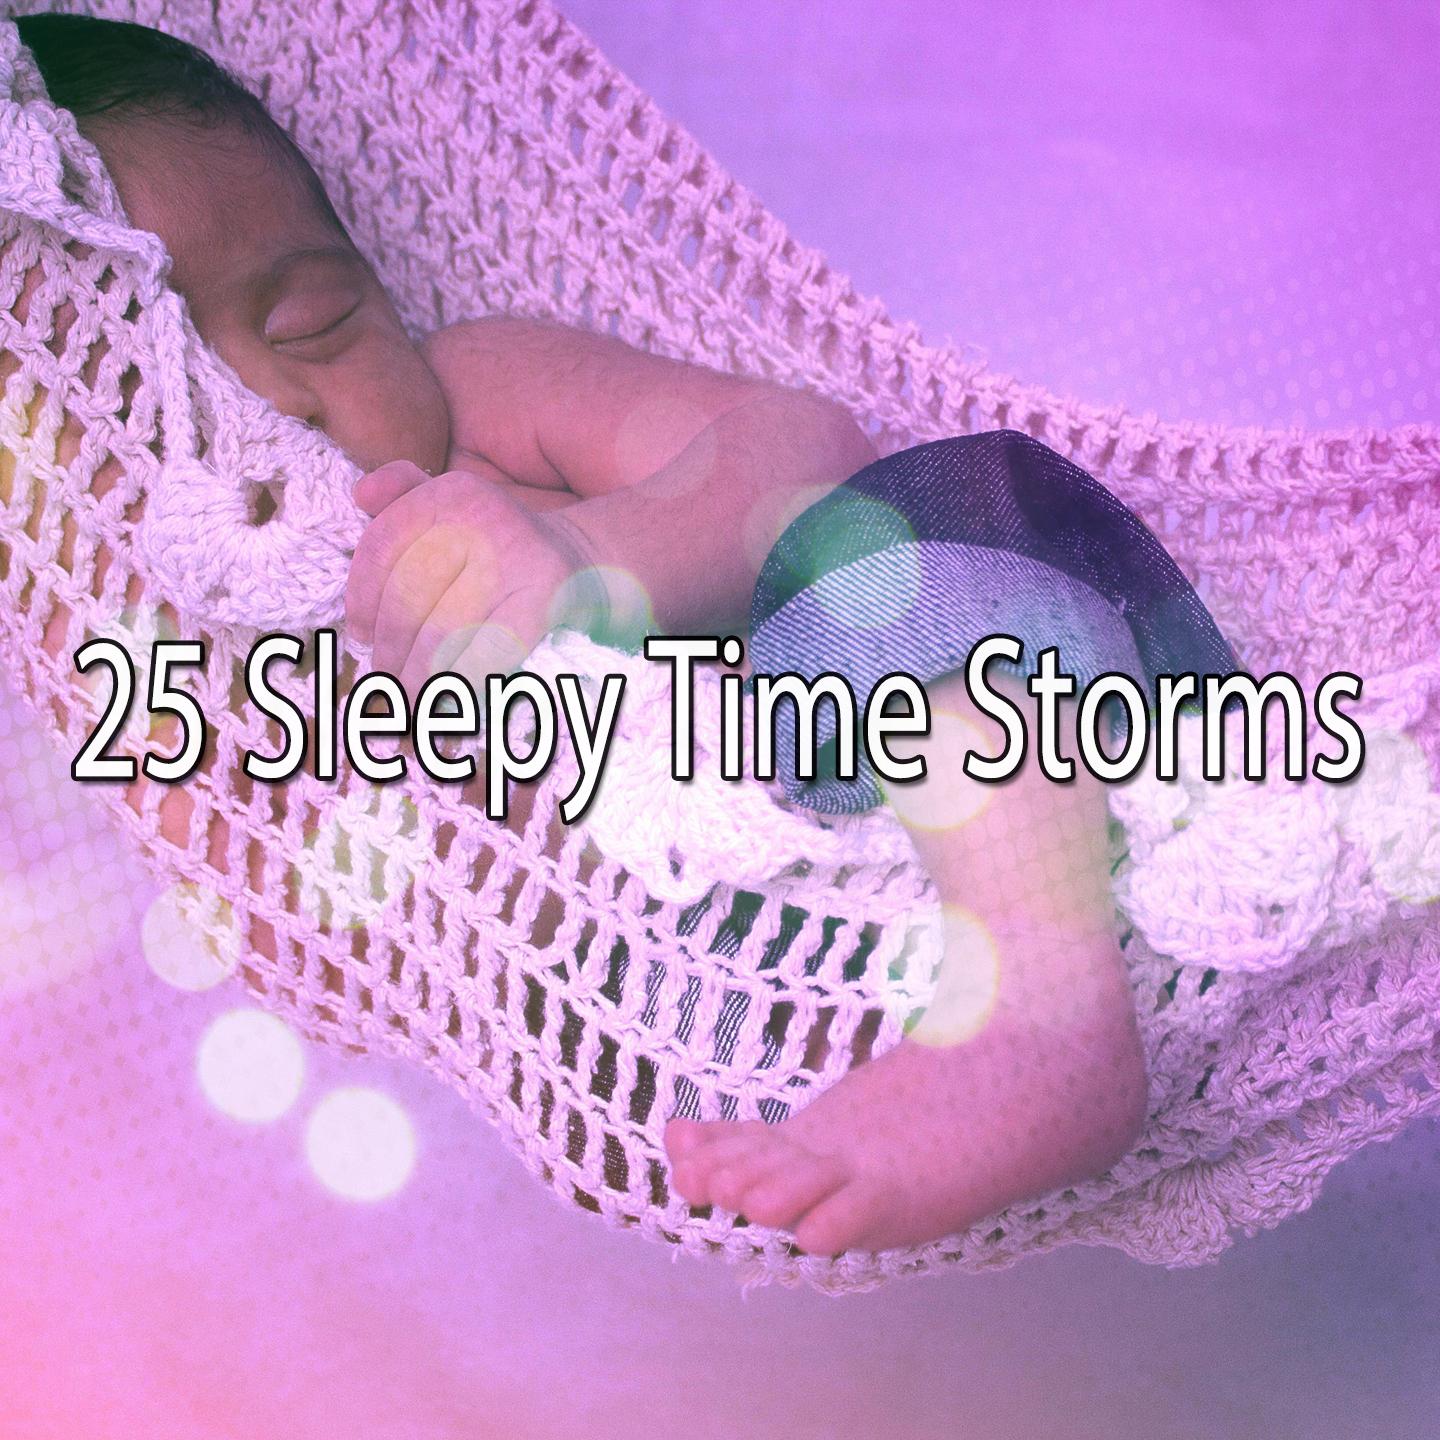 25 Sleepy Time Storms